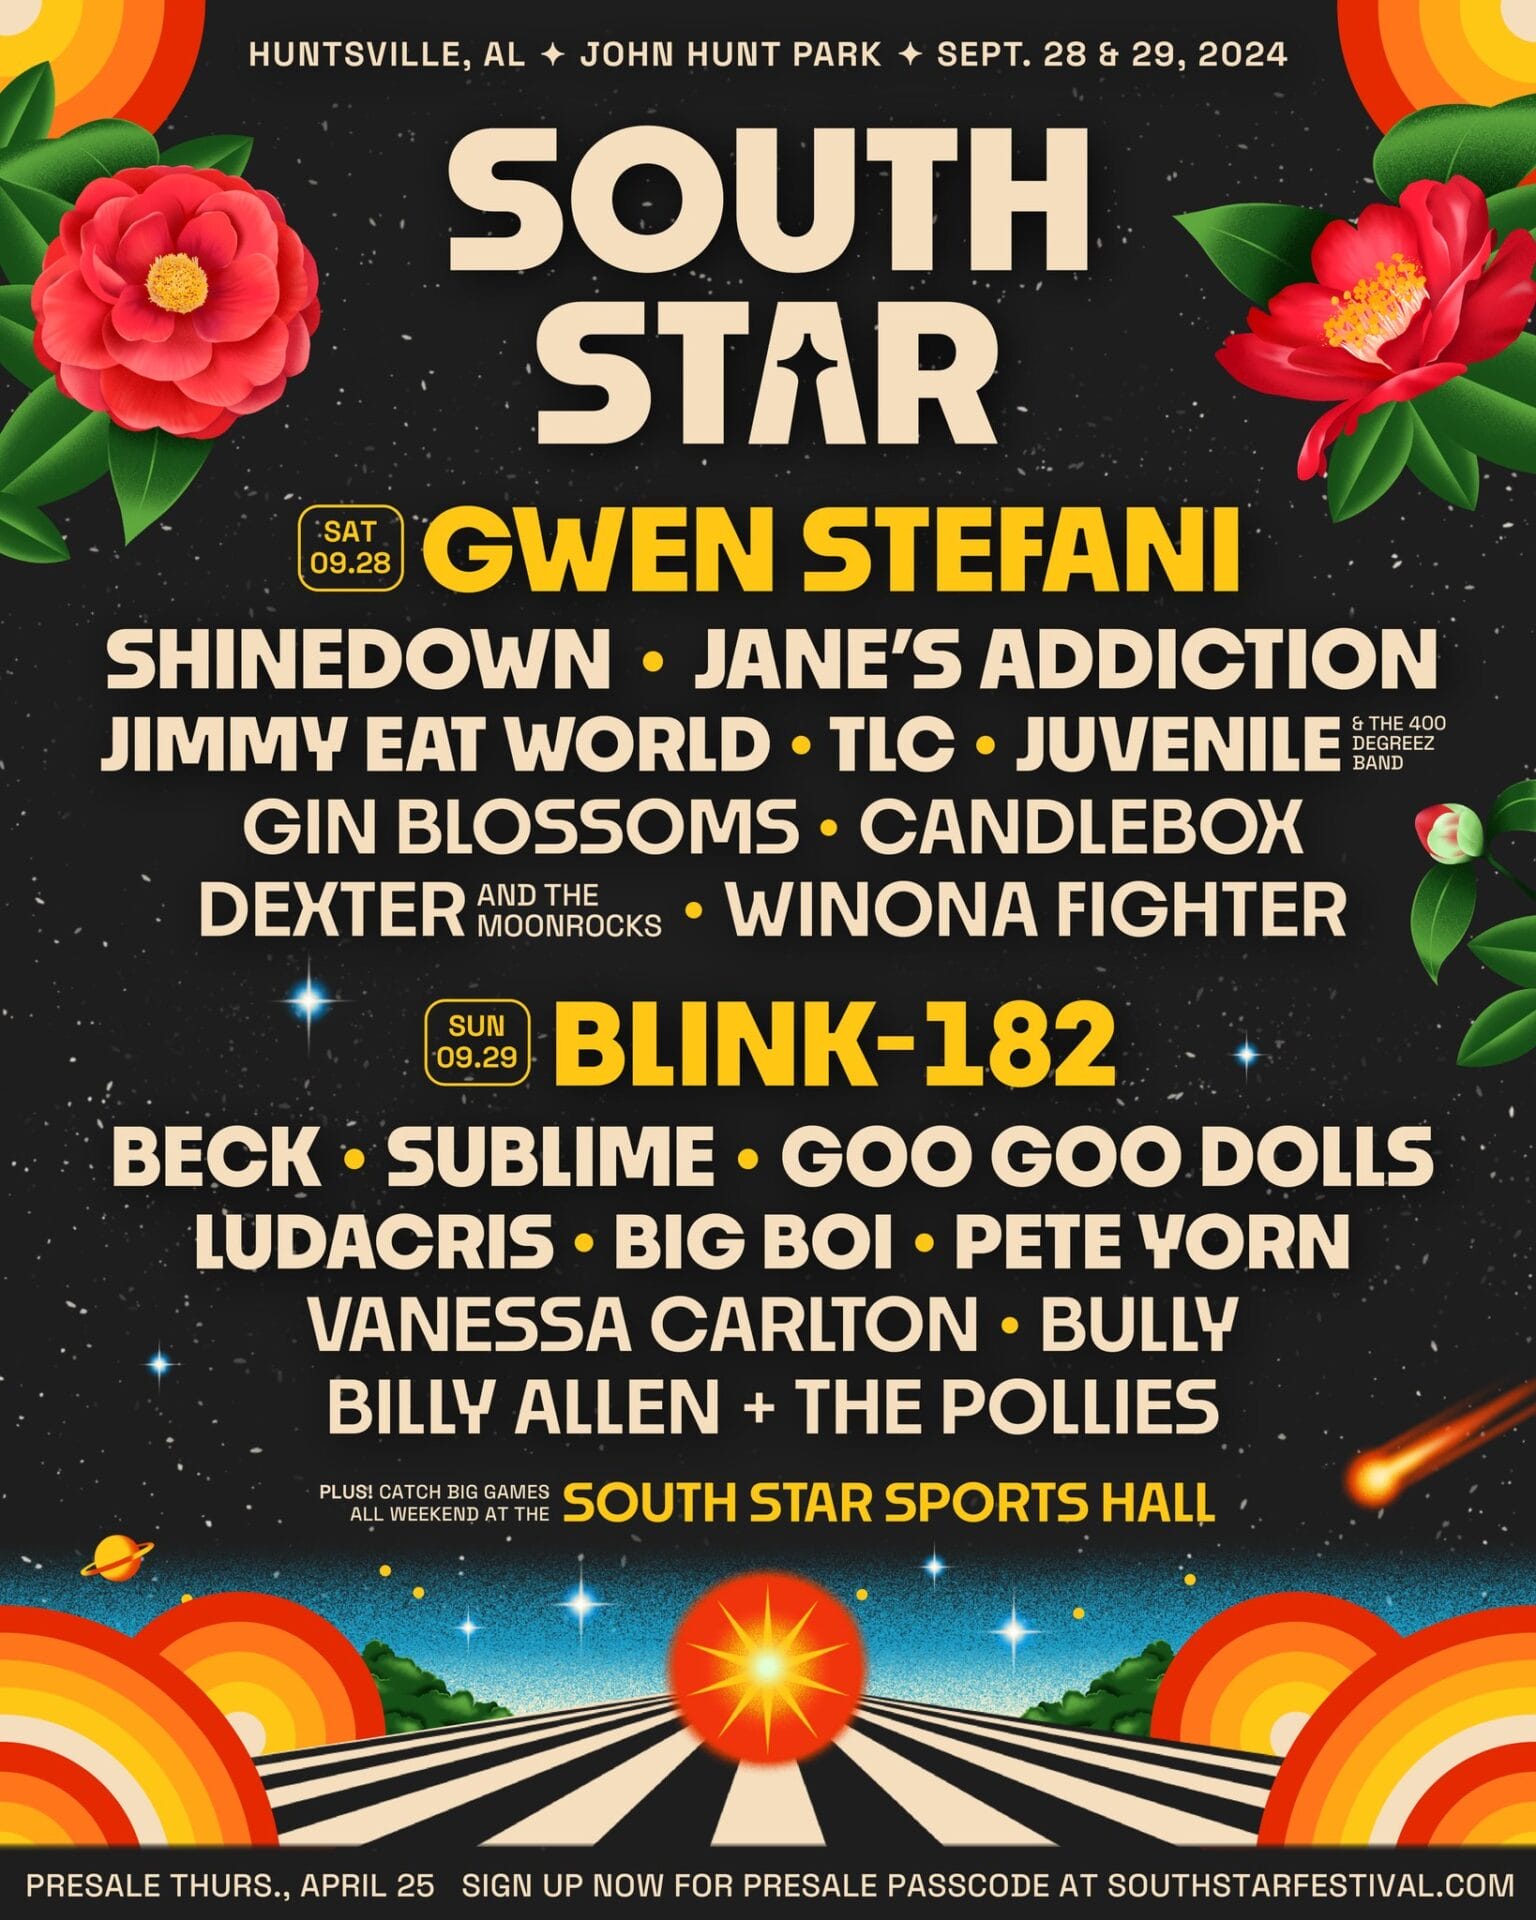 Gwen Stefani, blink-182 to Headline Inaugural South Star Festival